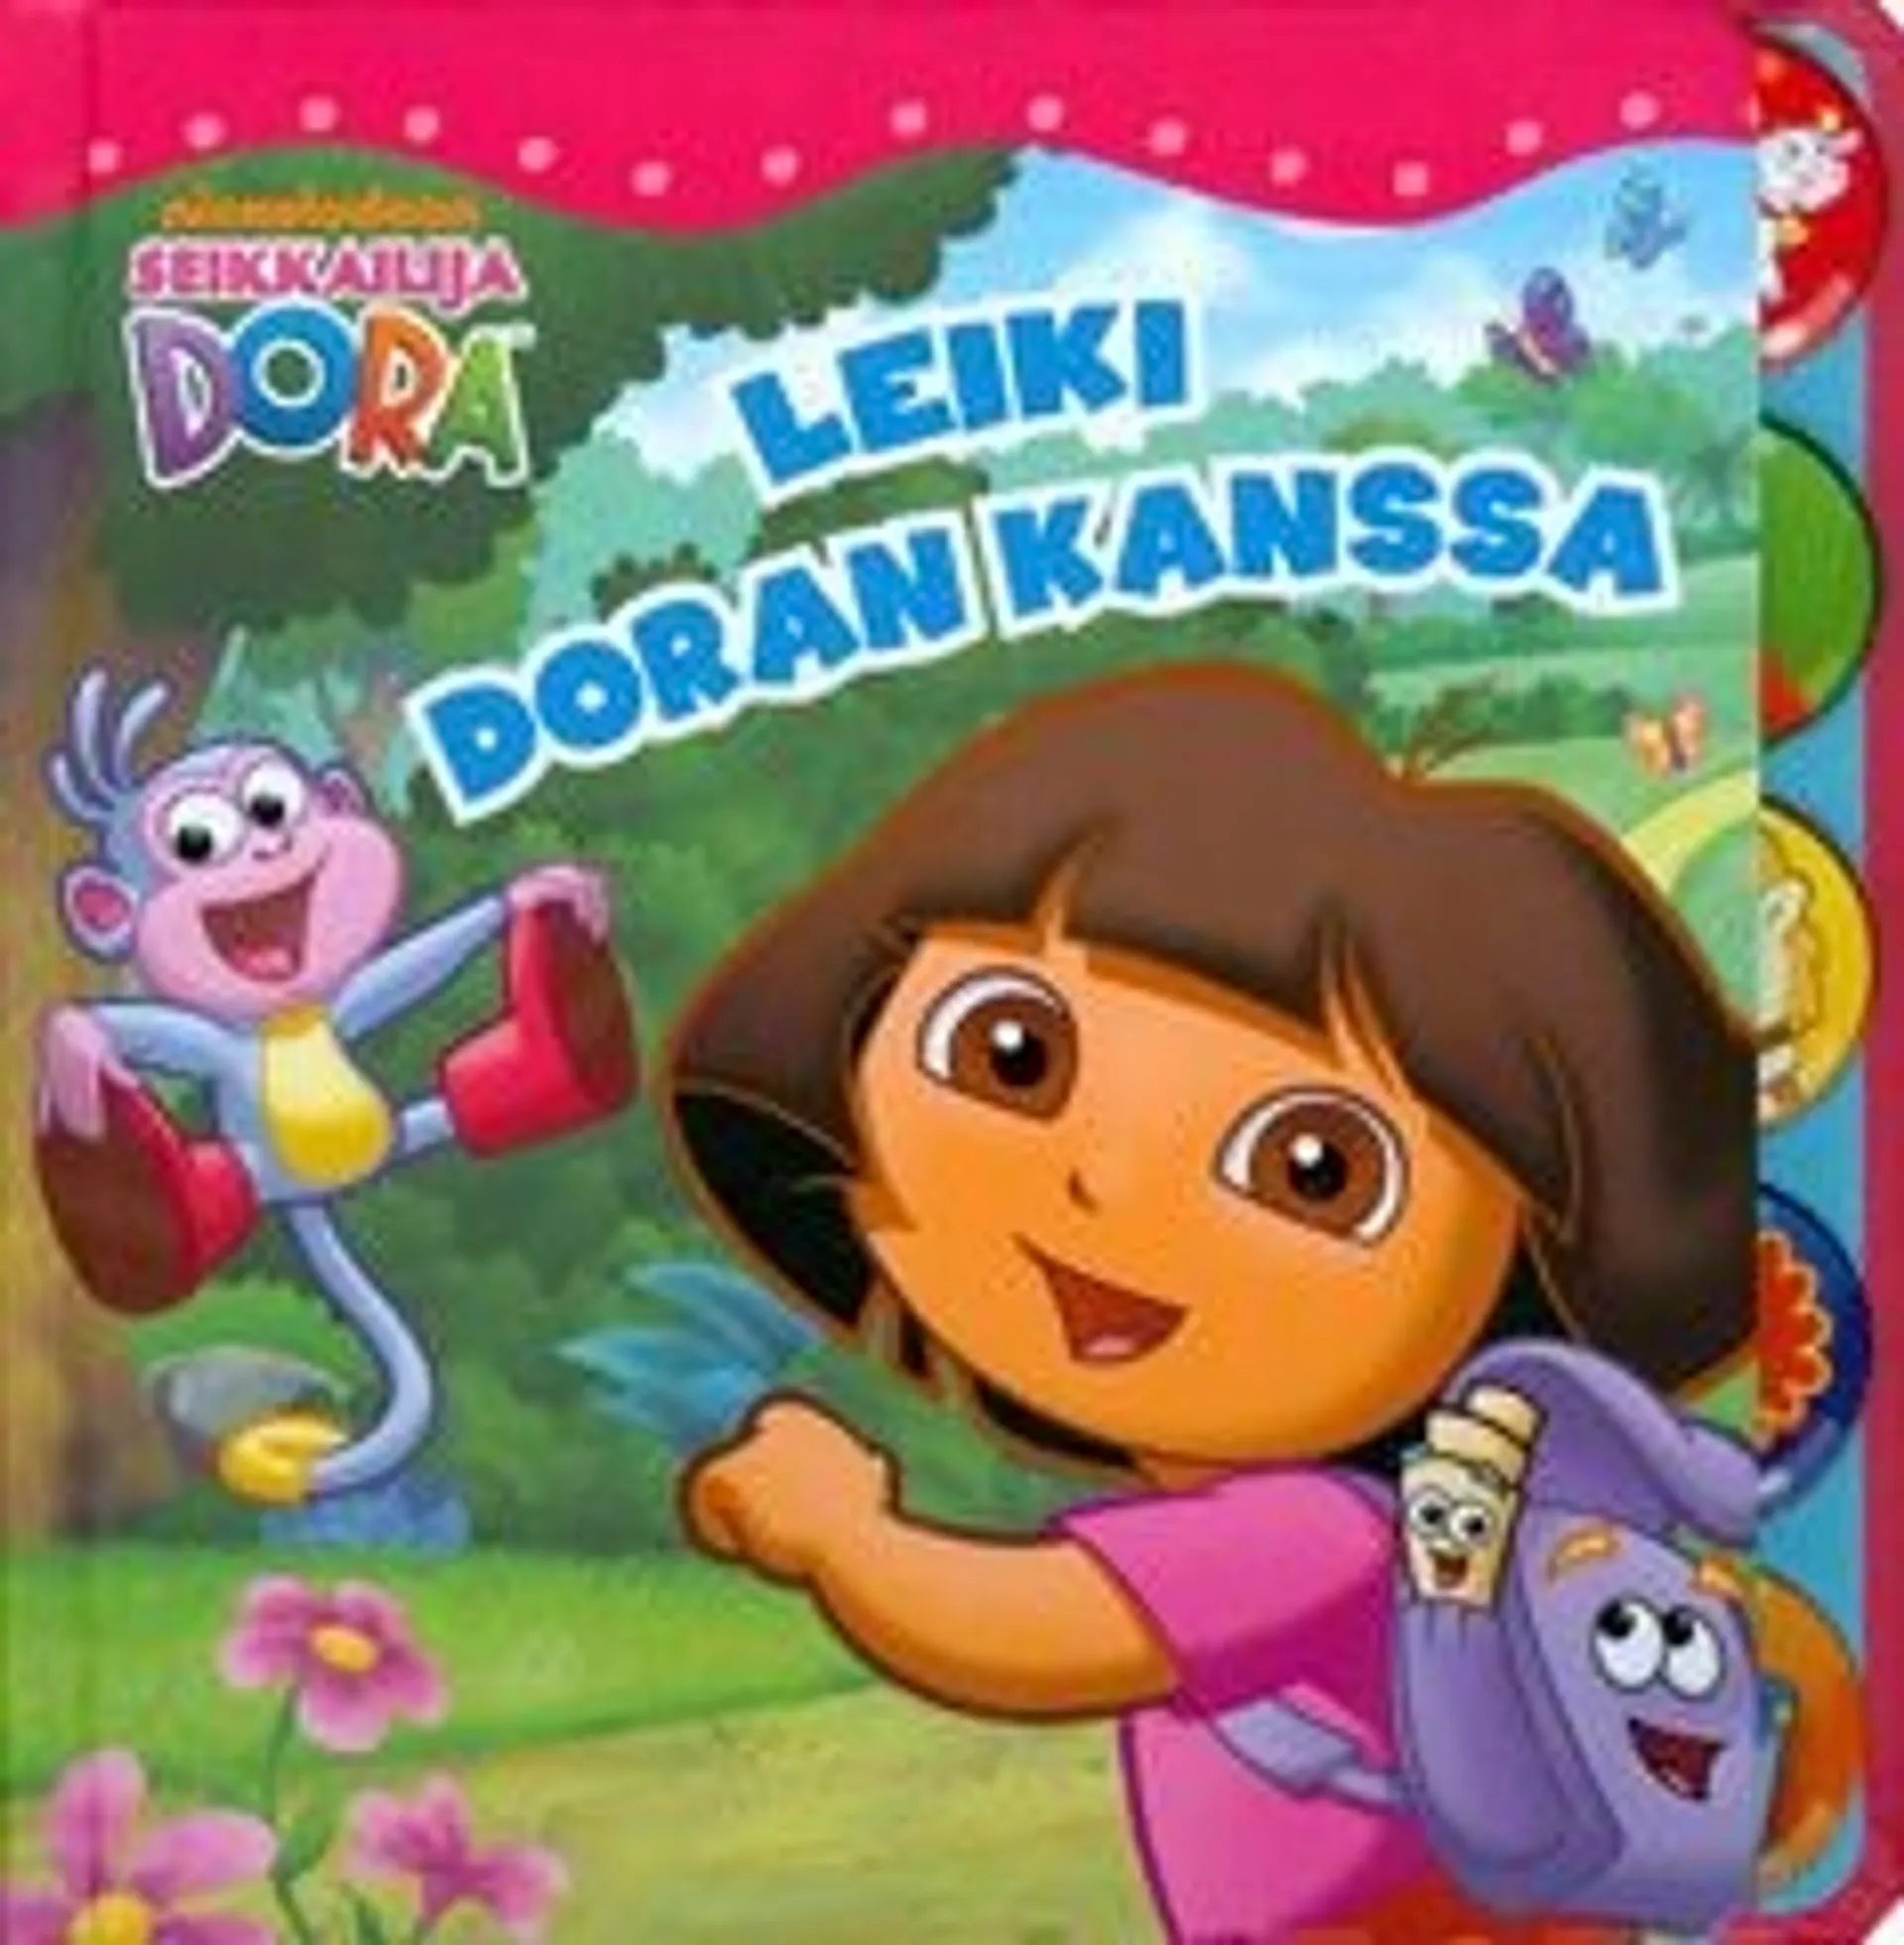 Leiki Doran kanssa